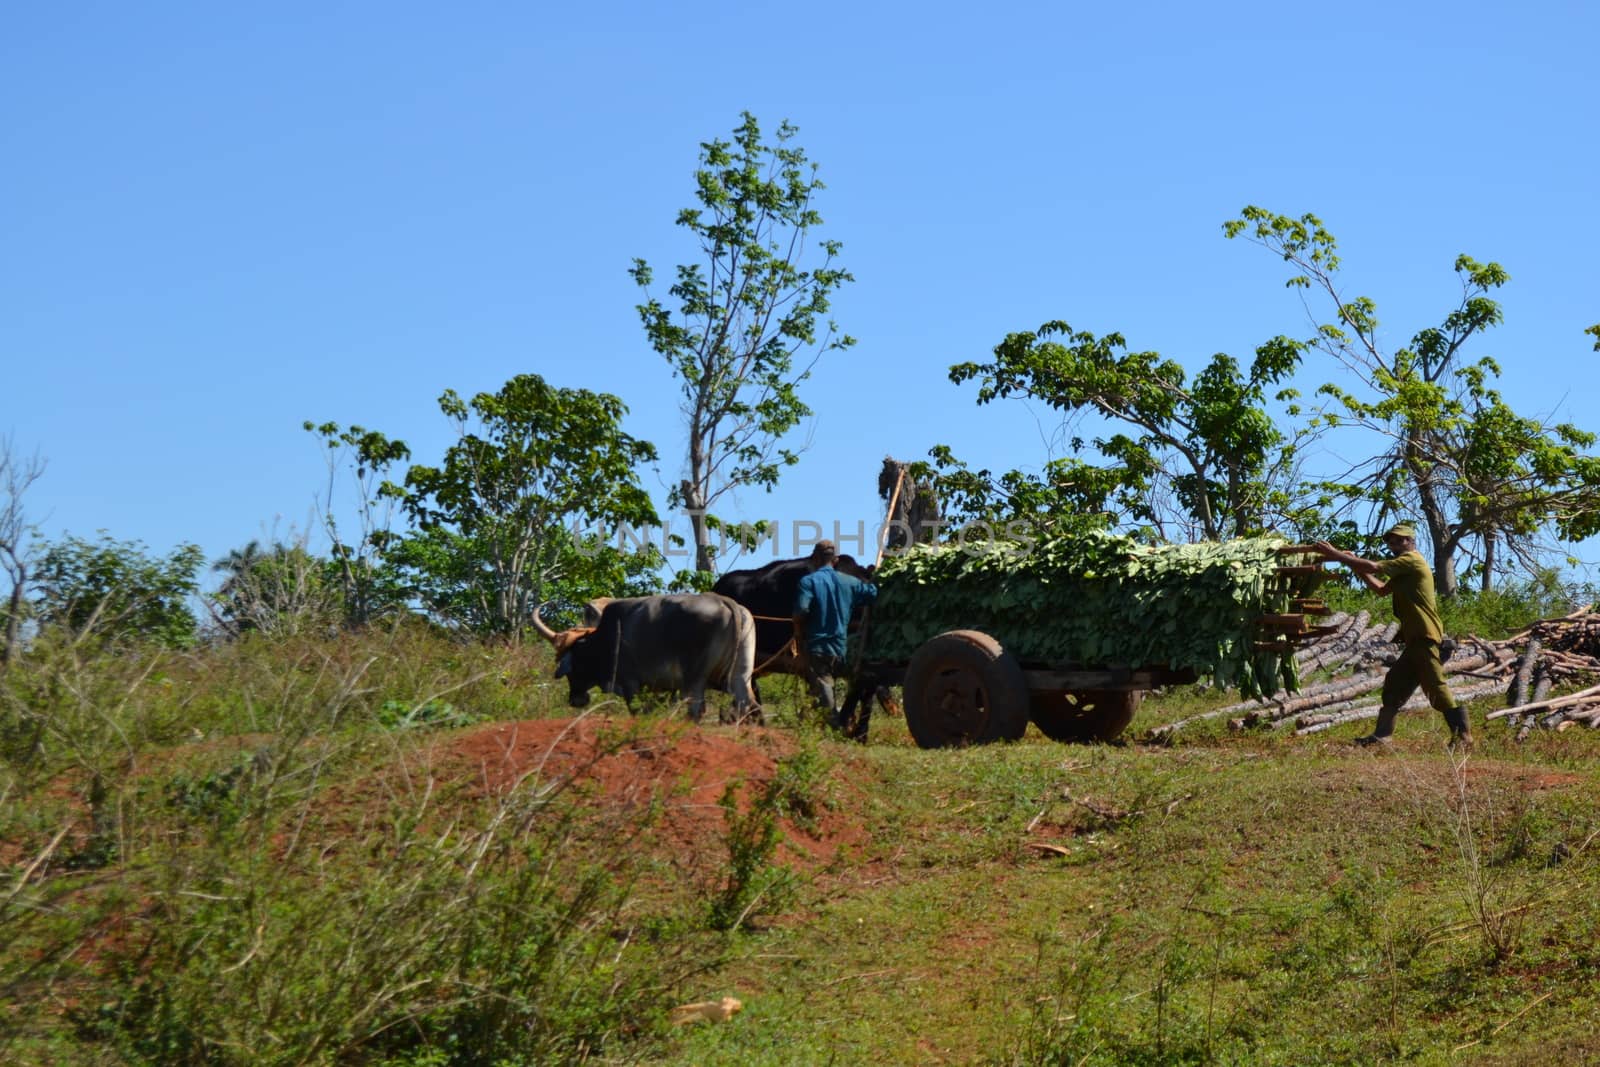 Vinales, Cuba, March 2011: Cuban farmers harvesting tobacco crop in a field